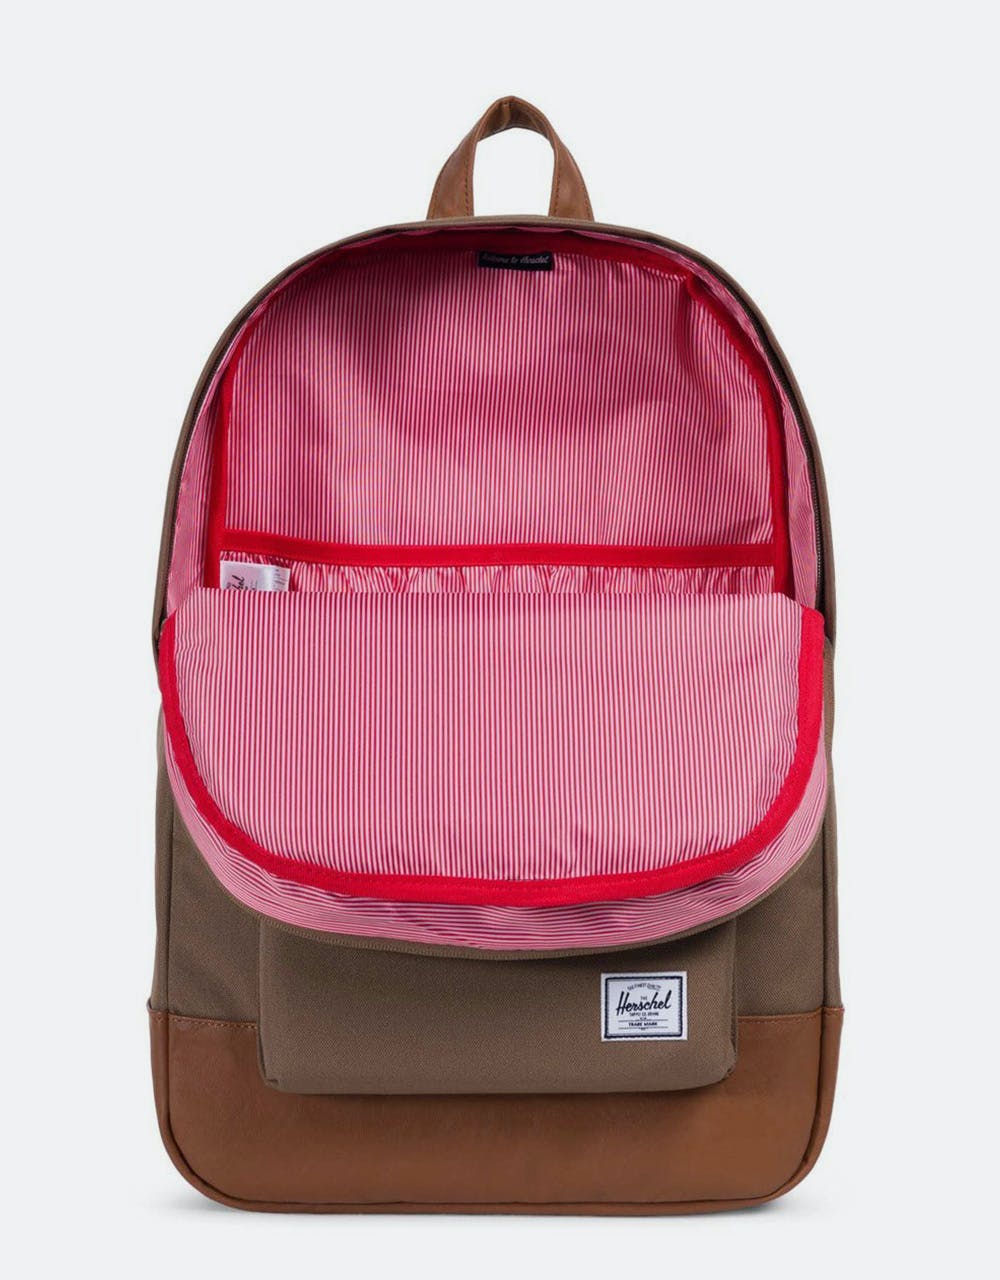 Herschel Supply Co. Heritage Backpack - Cub/Tan